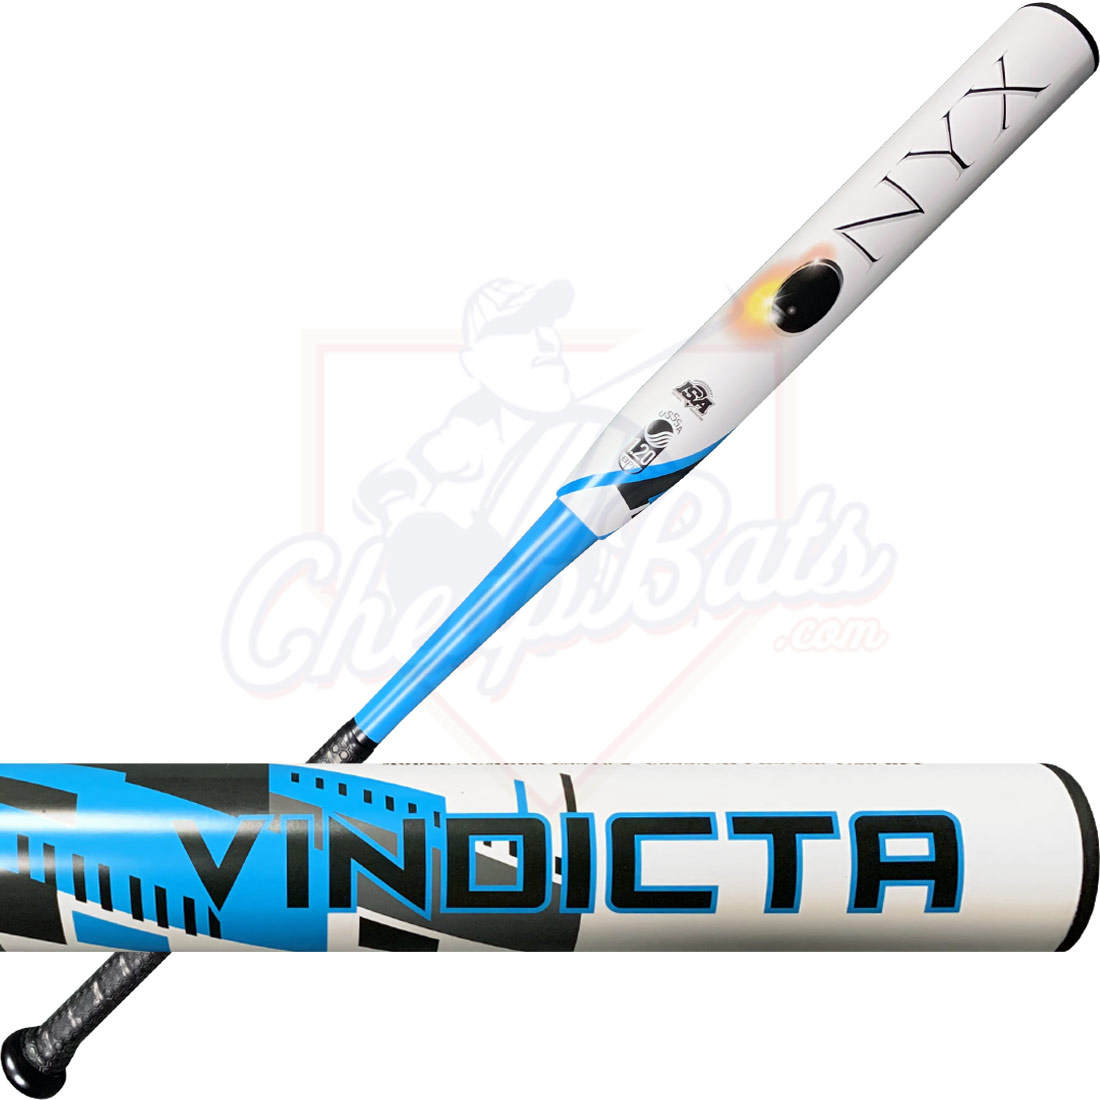 2021 Onyx Vindicta White CFT Slowpitch Softball Bat End Loaded USSSA